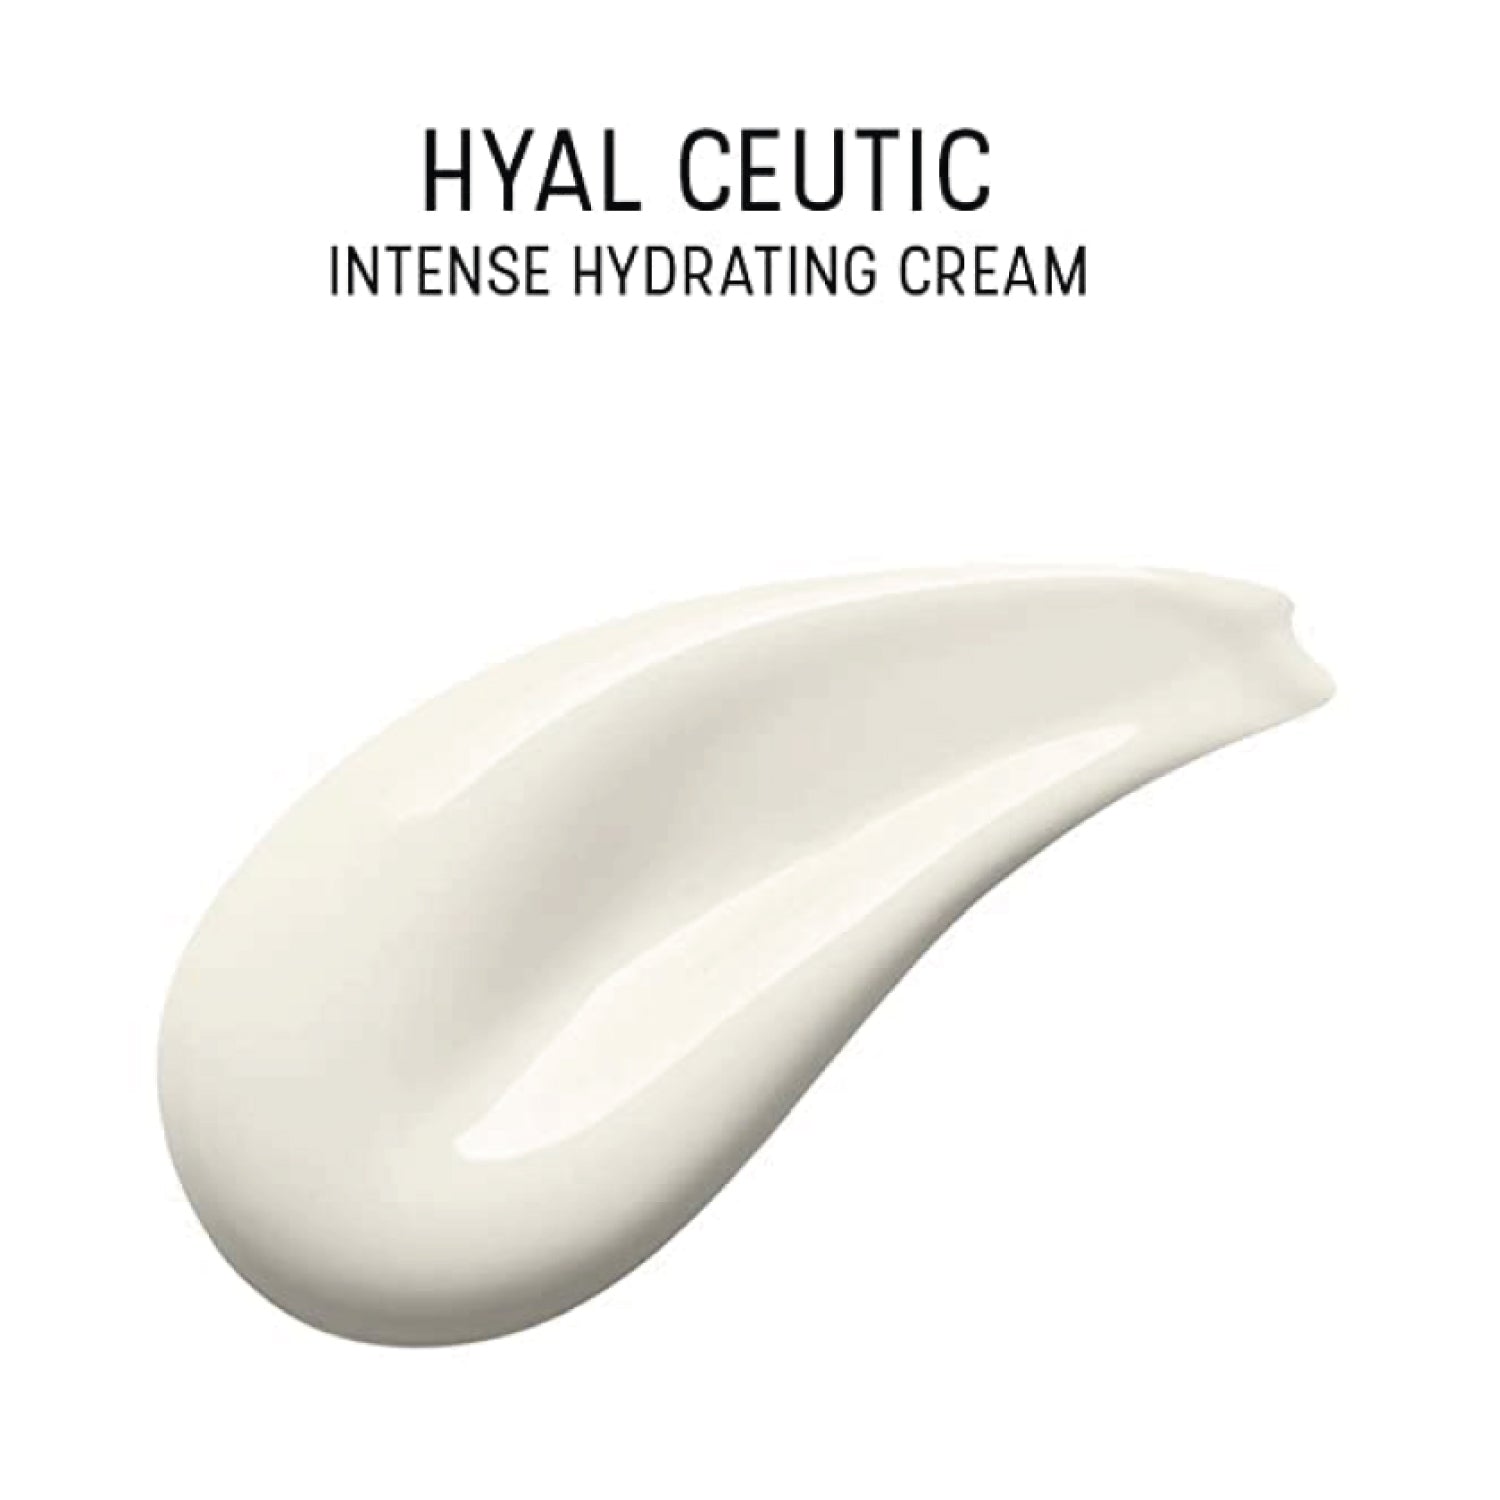 Dermaceutic Hyal Ceutic 40 ml - Hydrating Cream